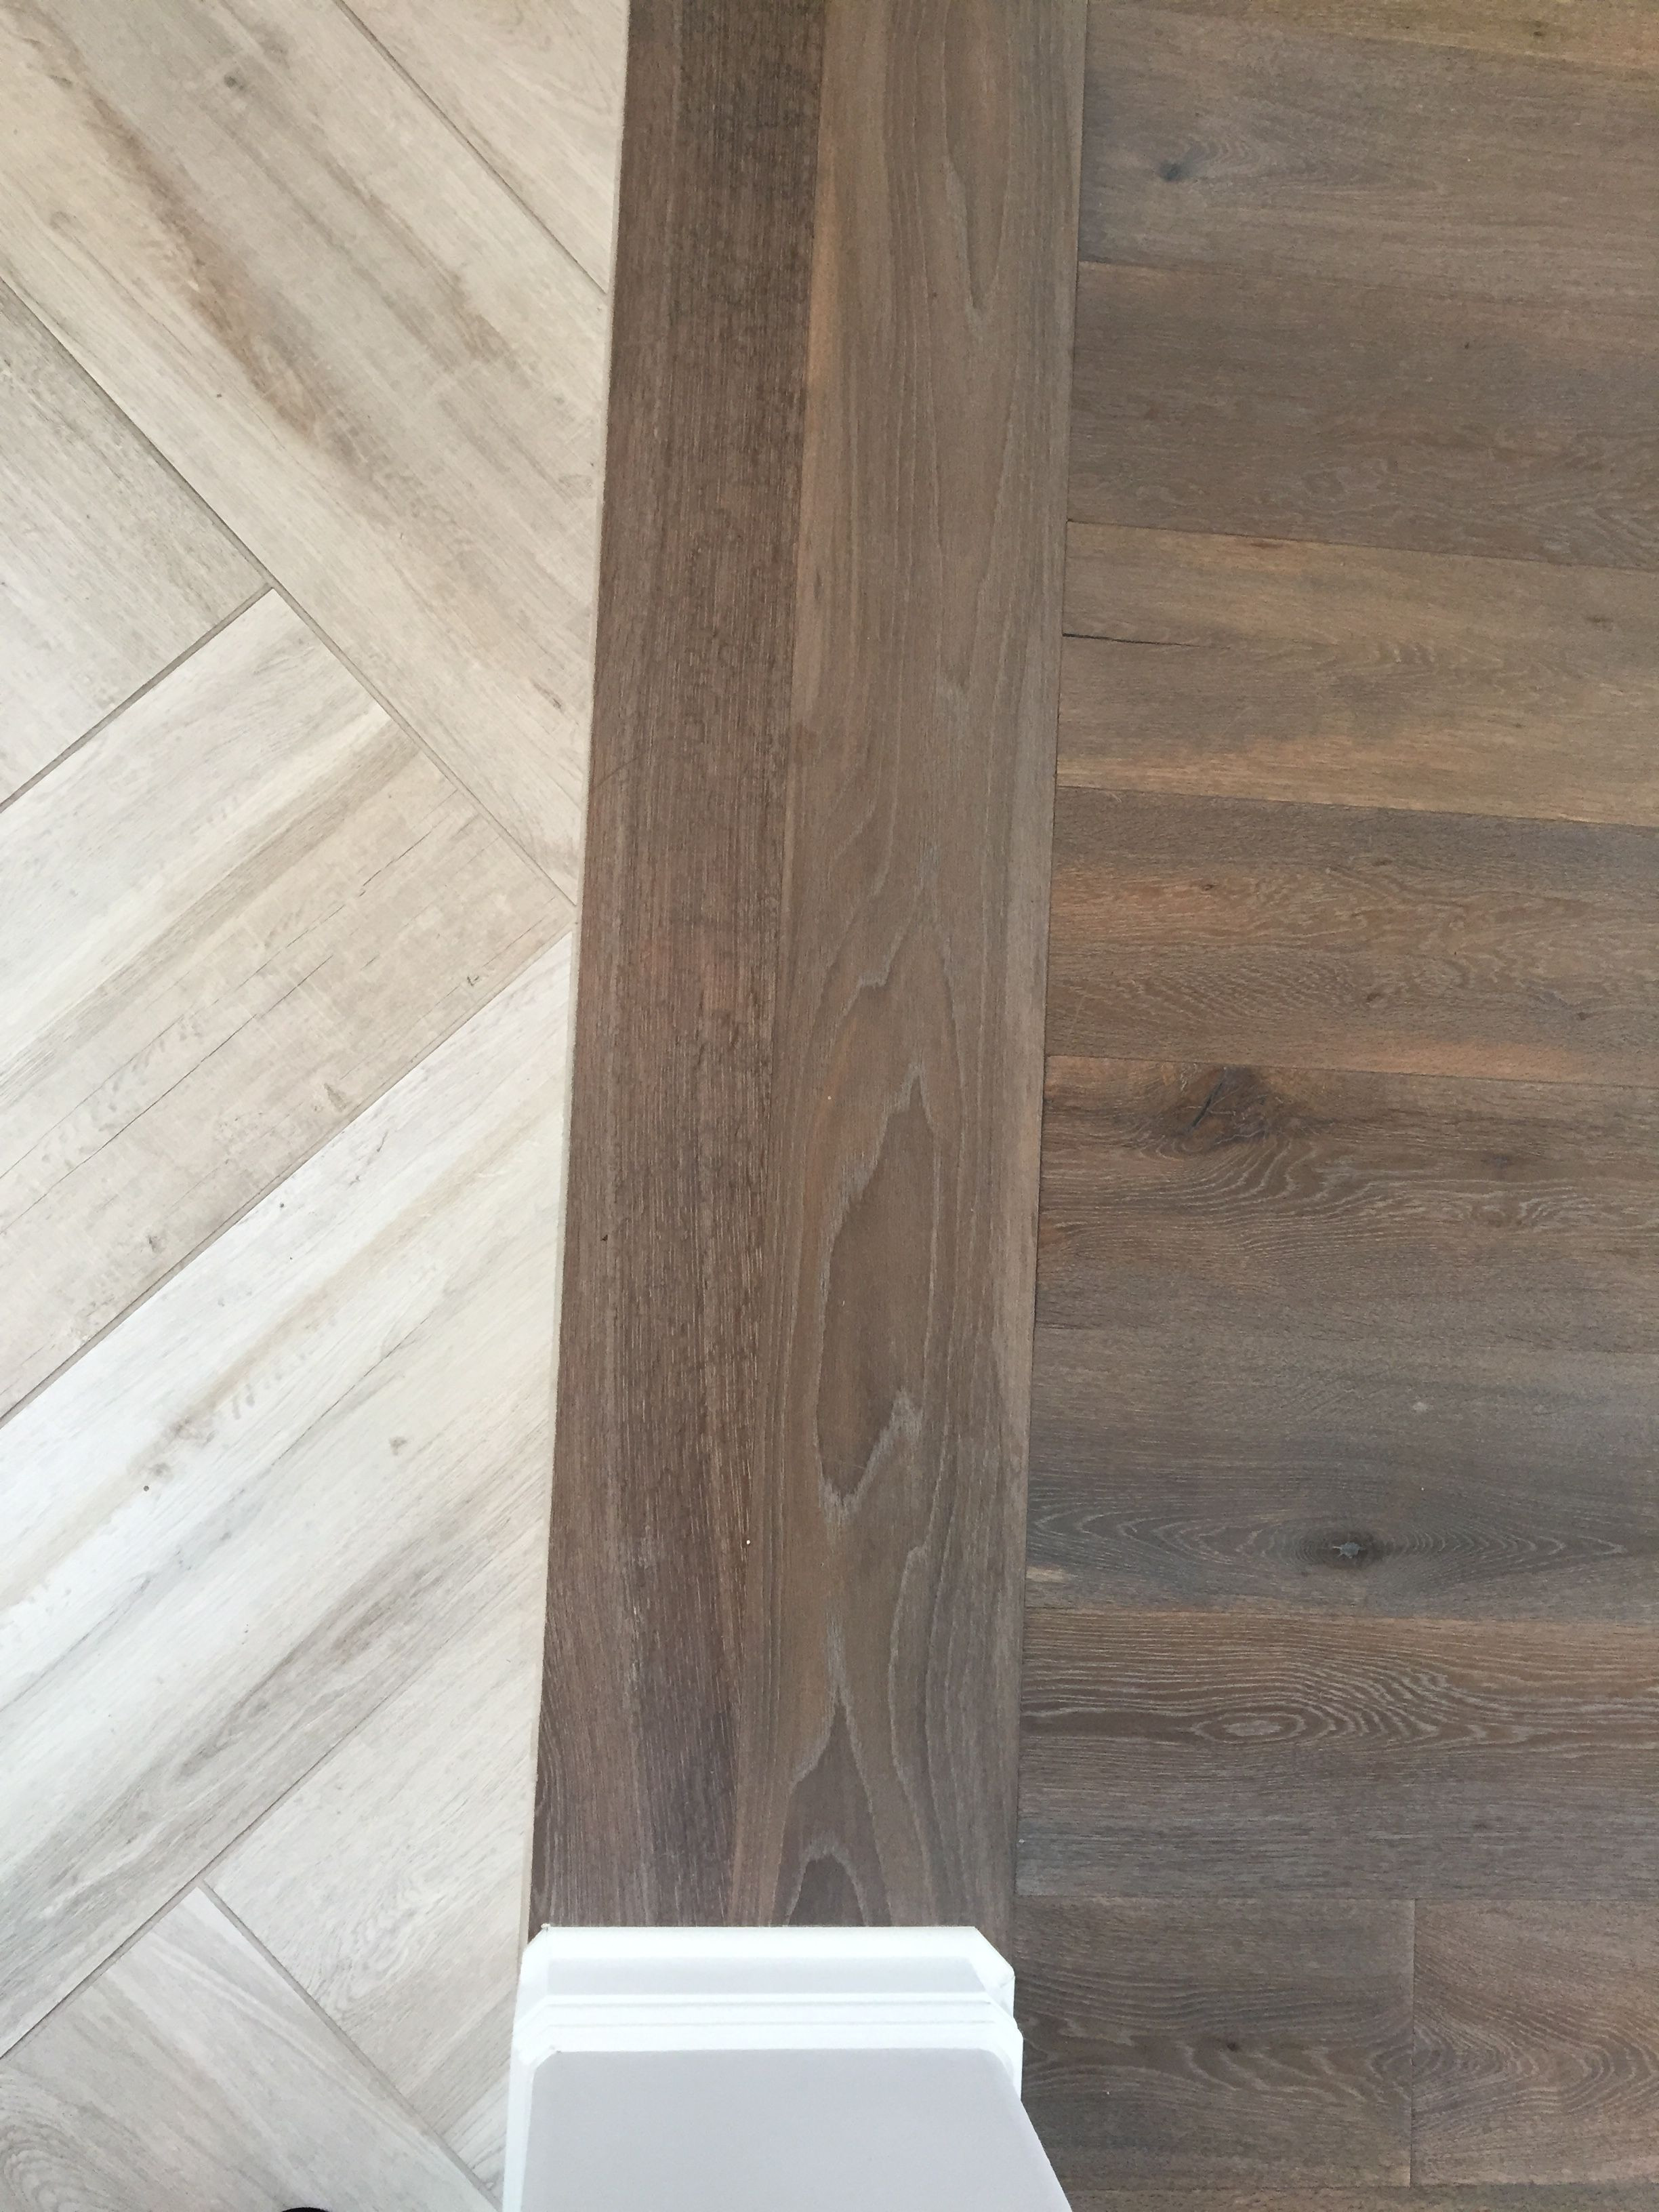 tile or hardwood floors of floor transition laminate to herringbone tile pattern model regarding floor transition laminate to herringbone tile pattern herringbone tile pattern herringbone wood floor